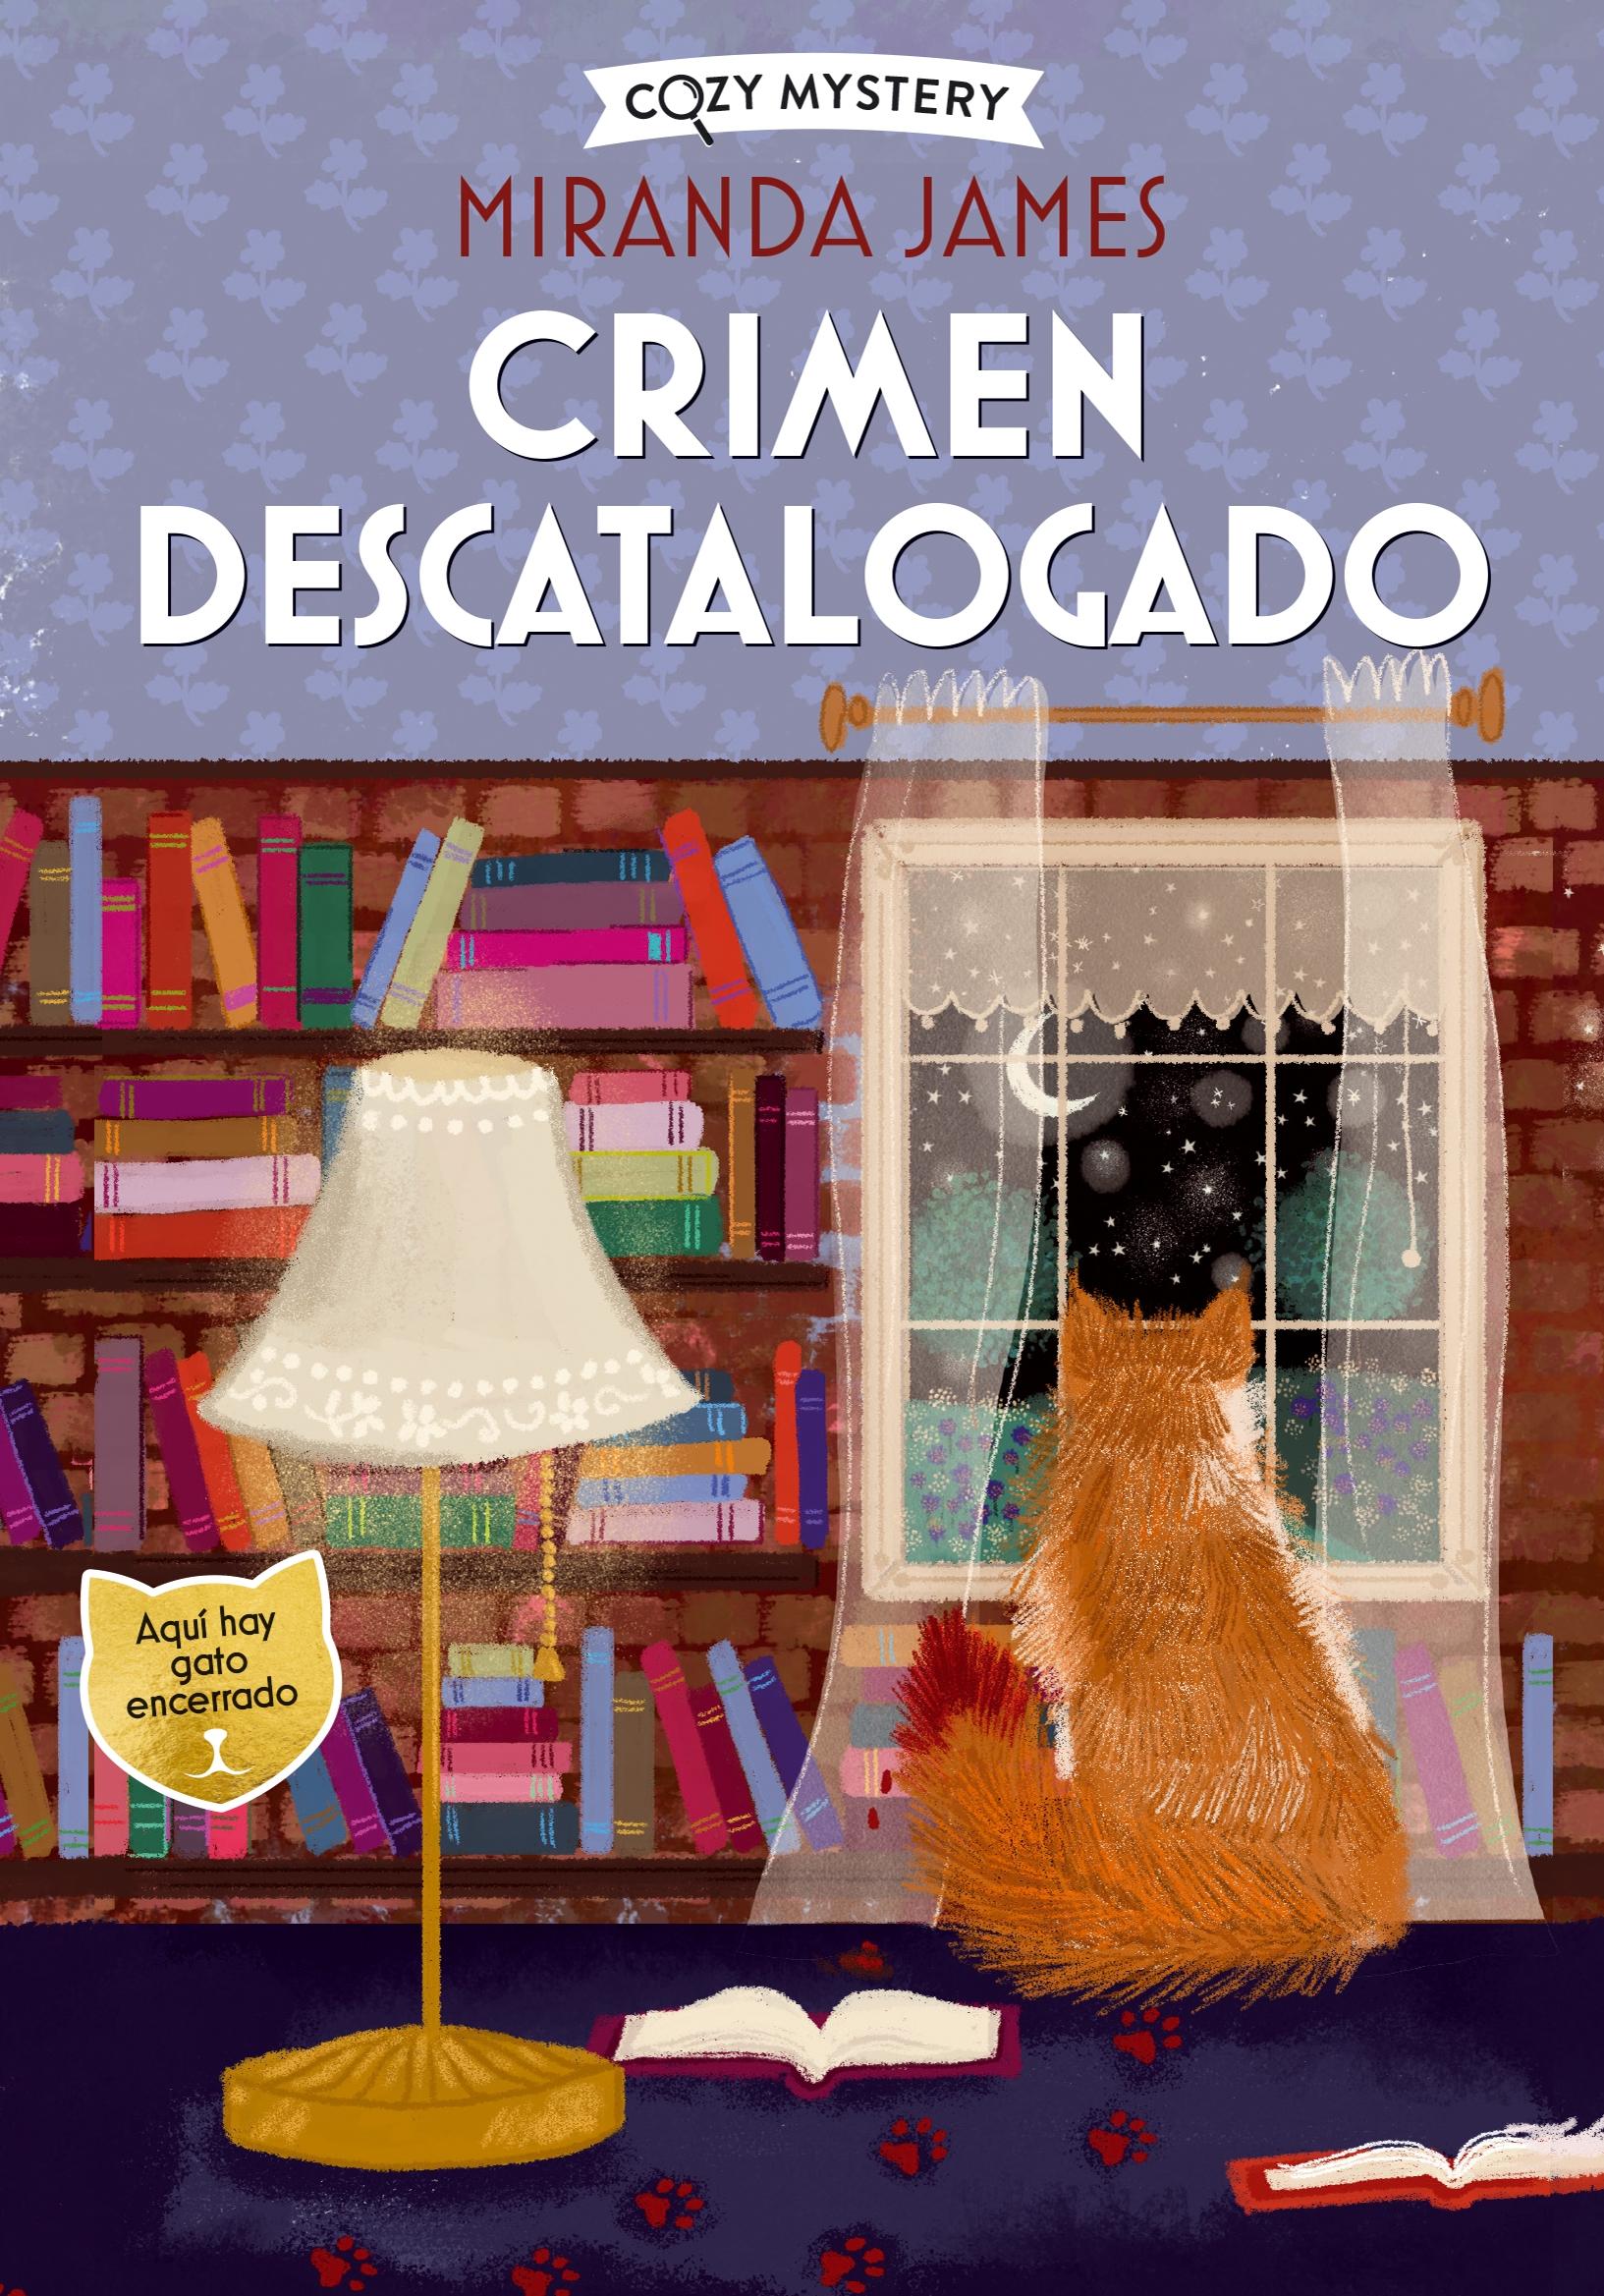 Crimen Descatalogado (Cozy Mystery). 